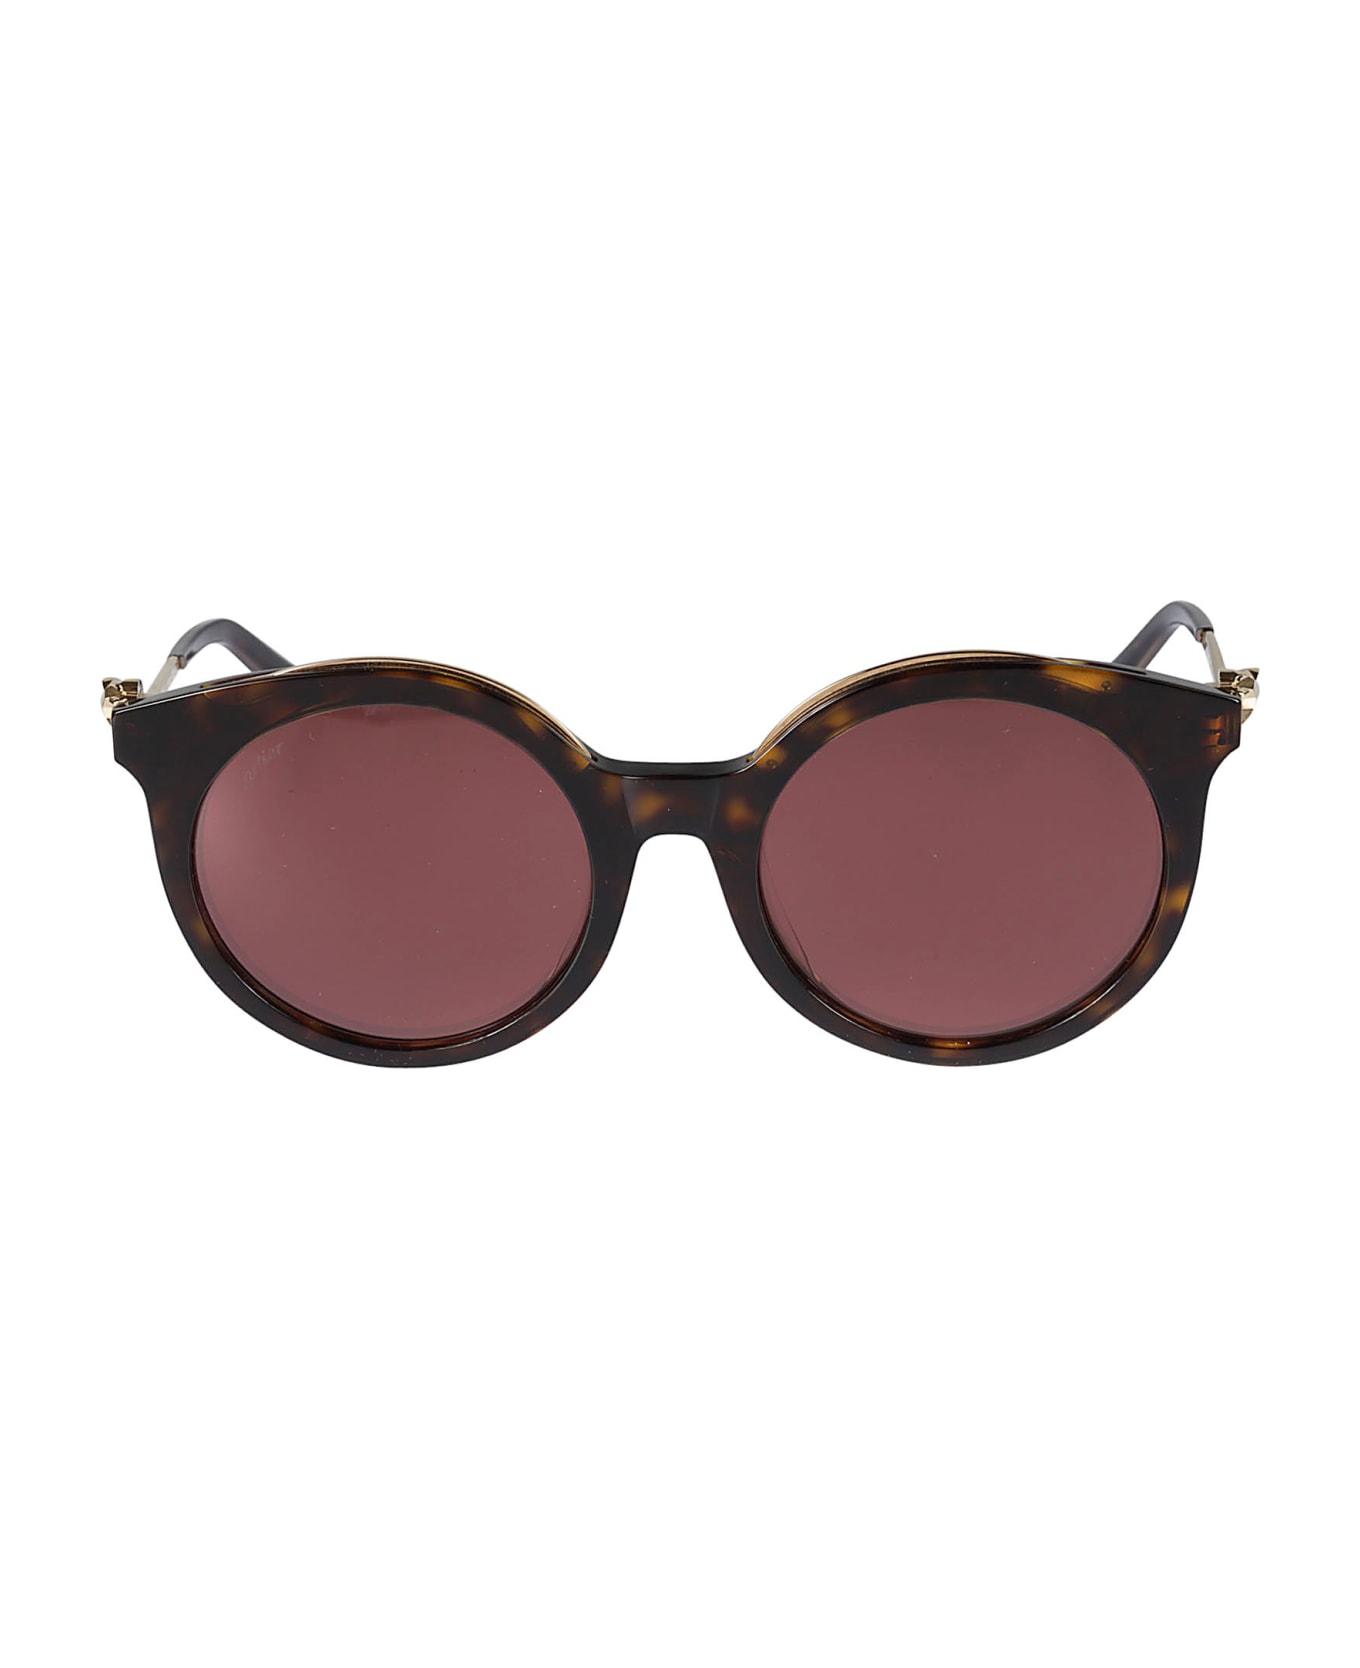 Cartier Eyewear Cay Eye Sunglasses - 002 havana gold red